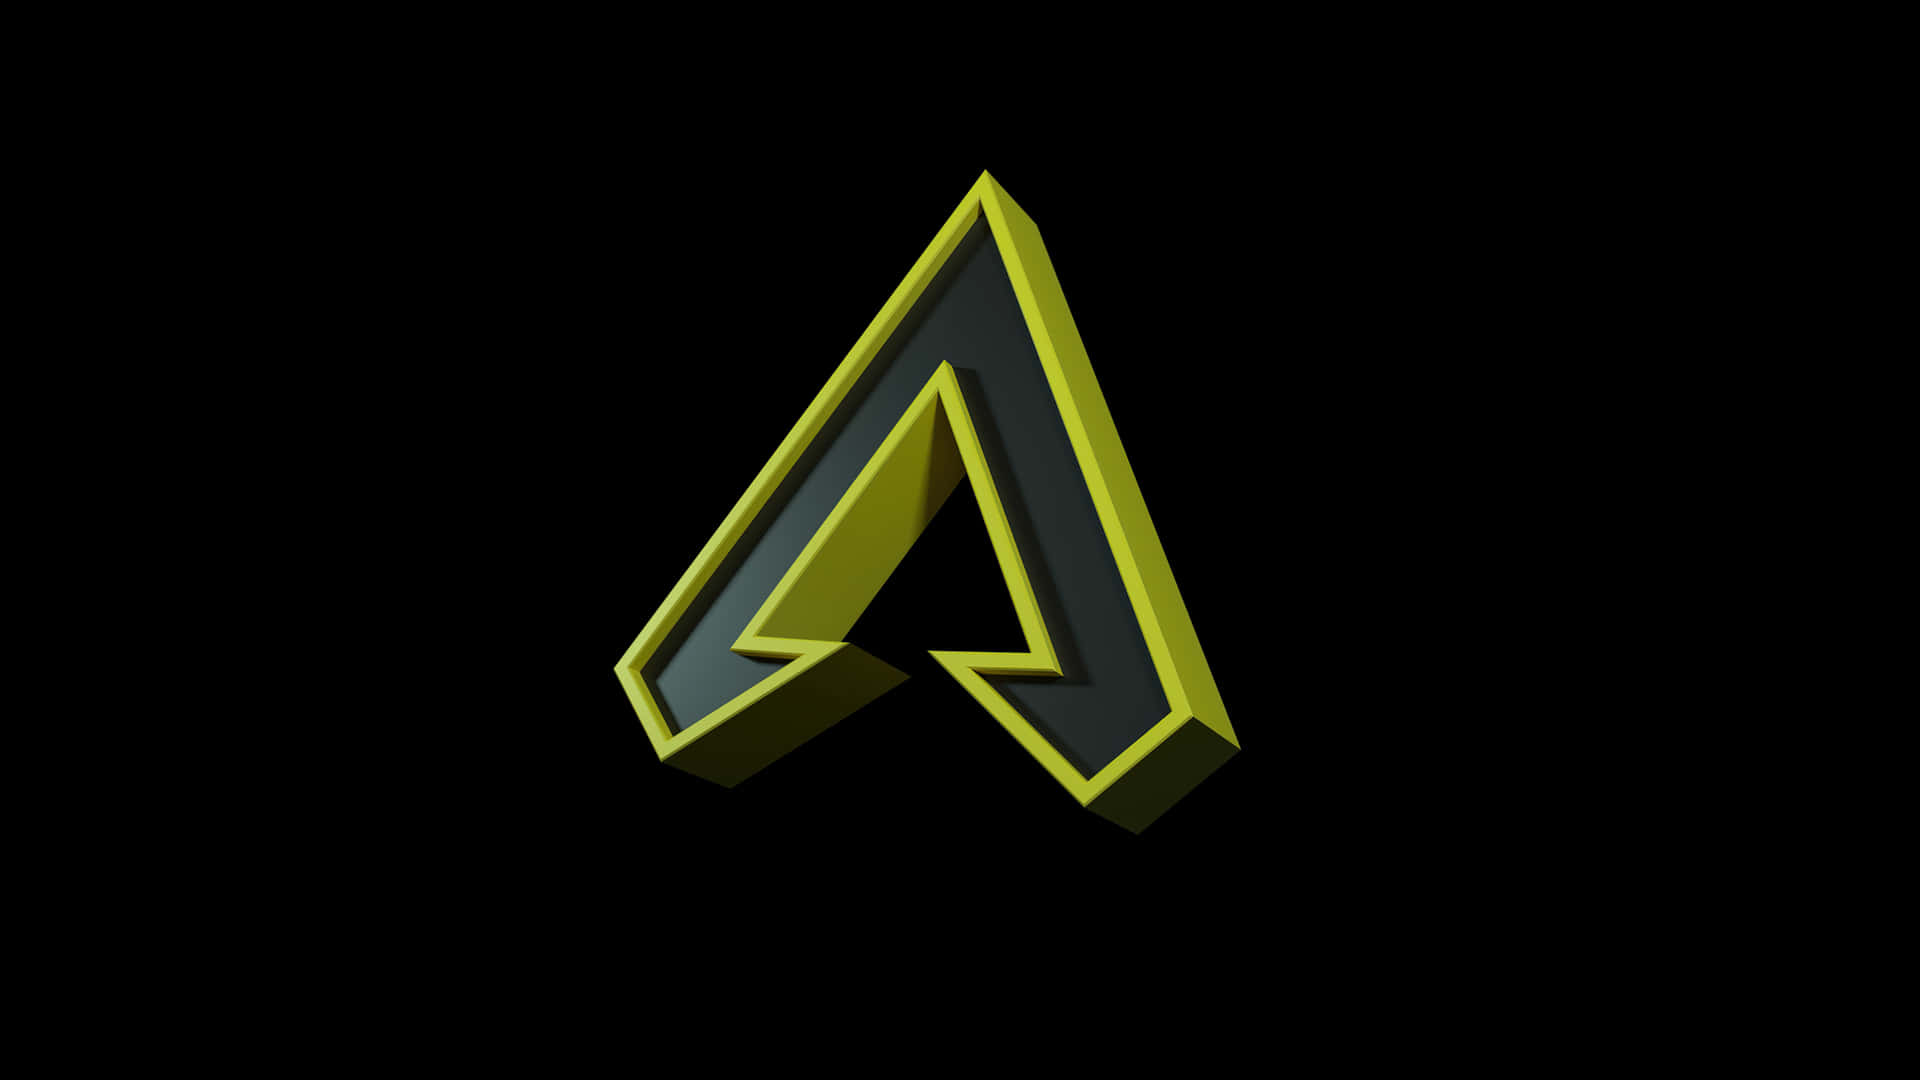 Logode Apex Legends En 3d En Negro Y Verde. Fondo de pantalla